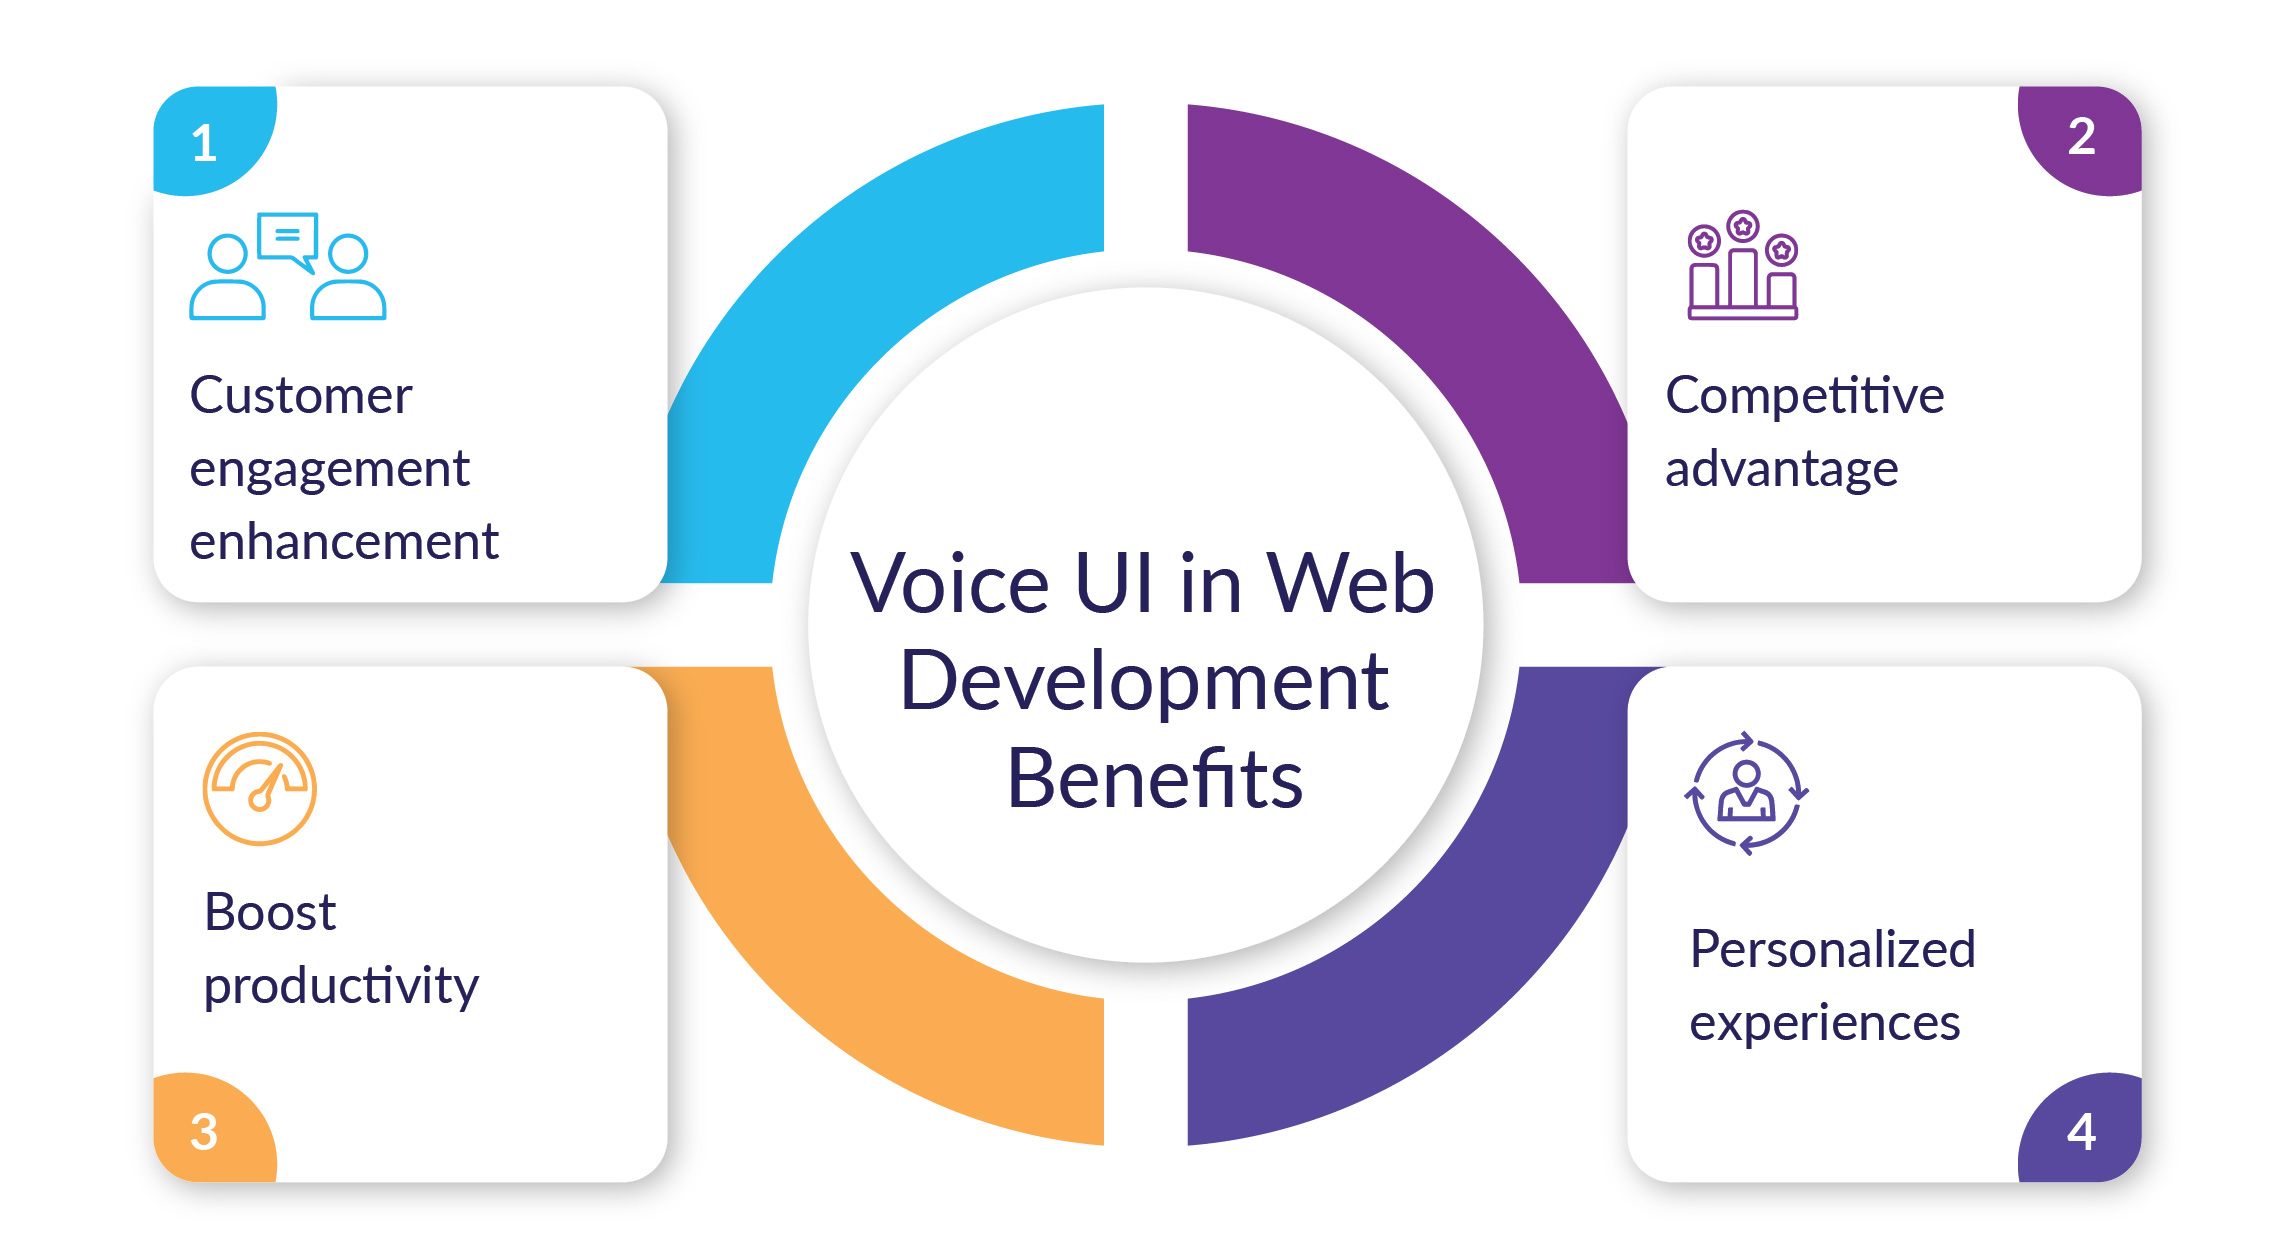 Voice UI in Web Development Benefits